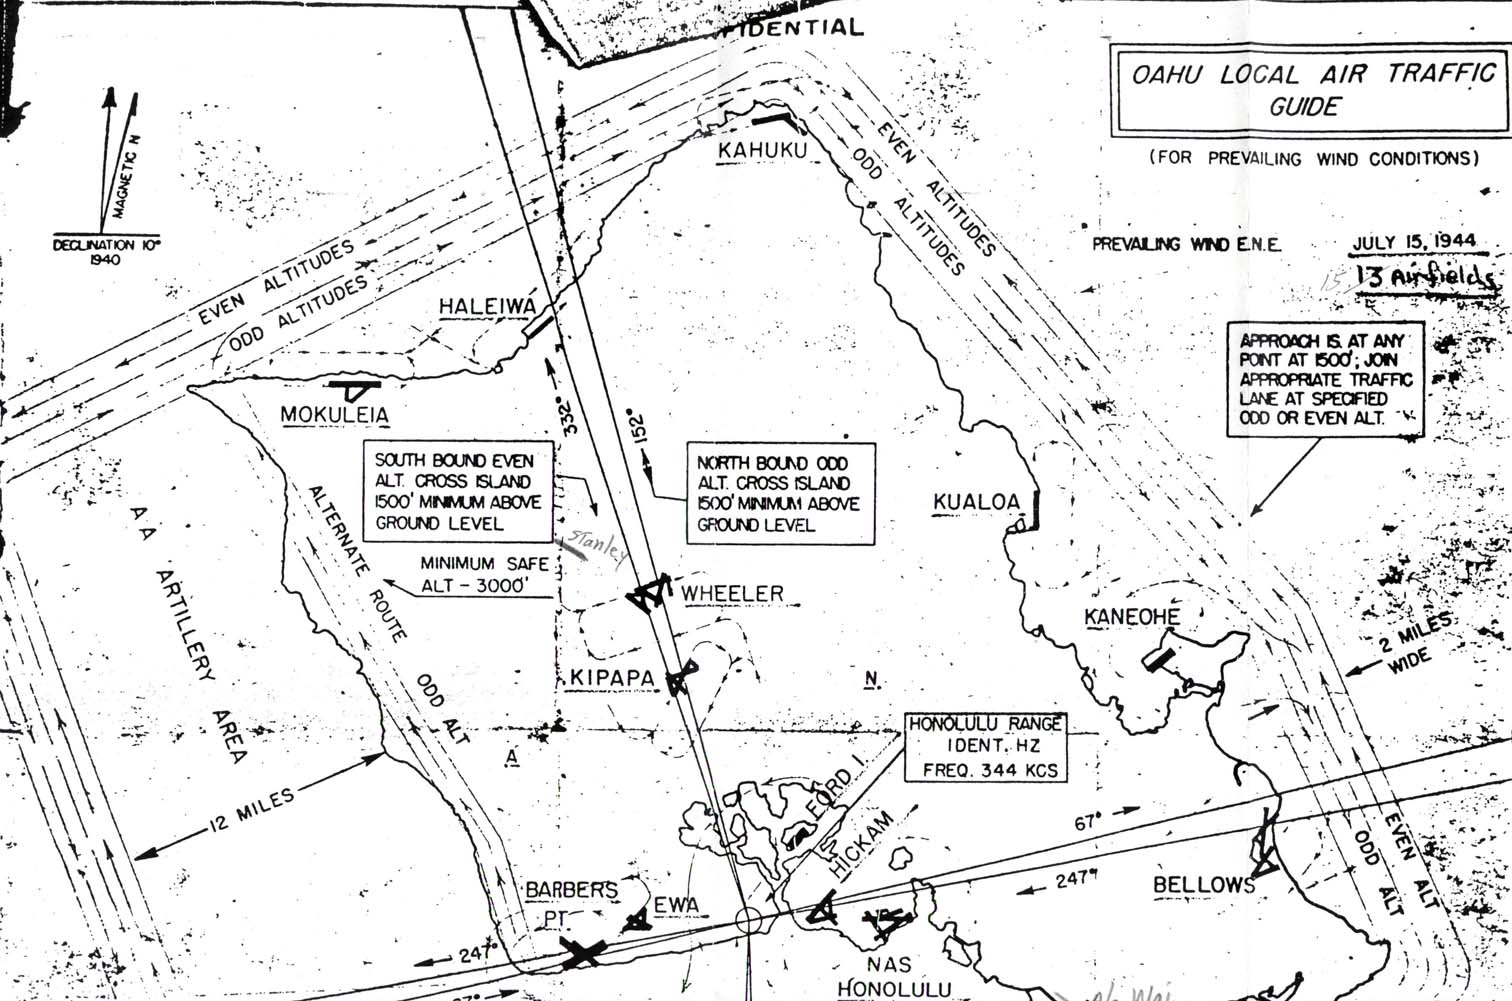 Oahu Air Traffic Plan, Jul 15, 1944.